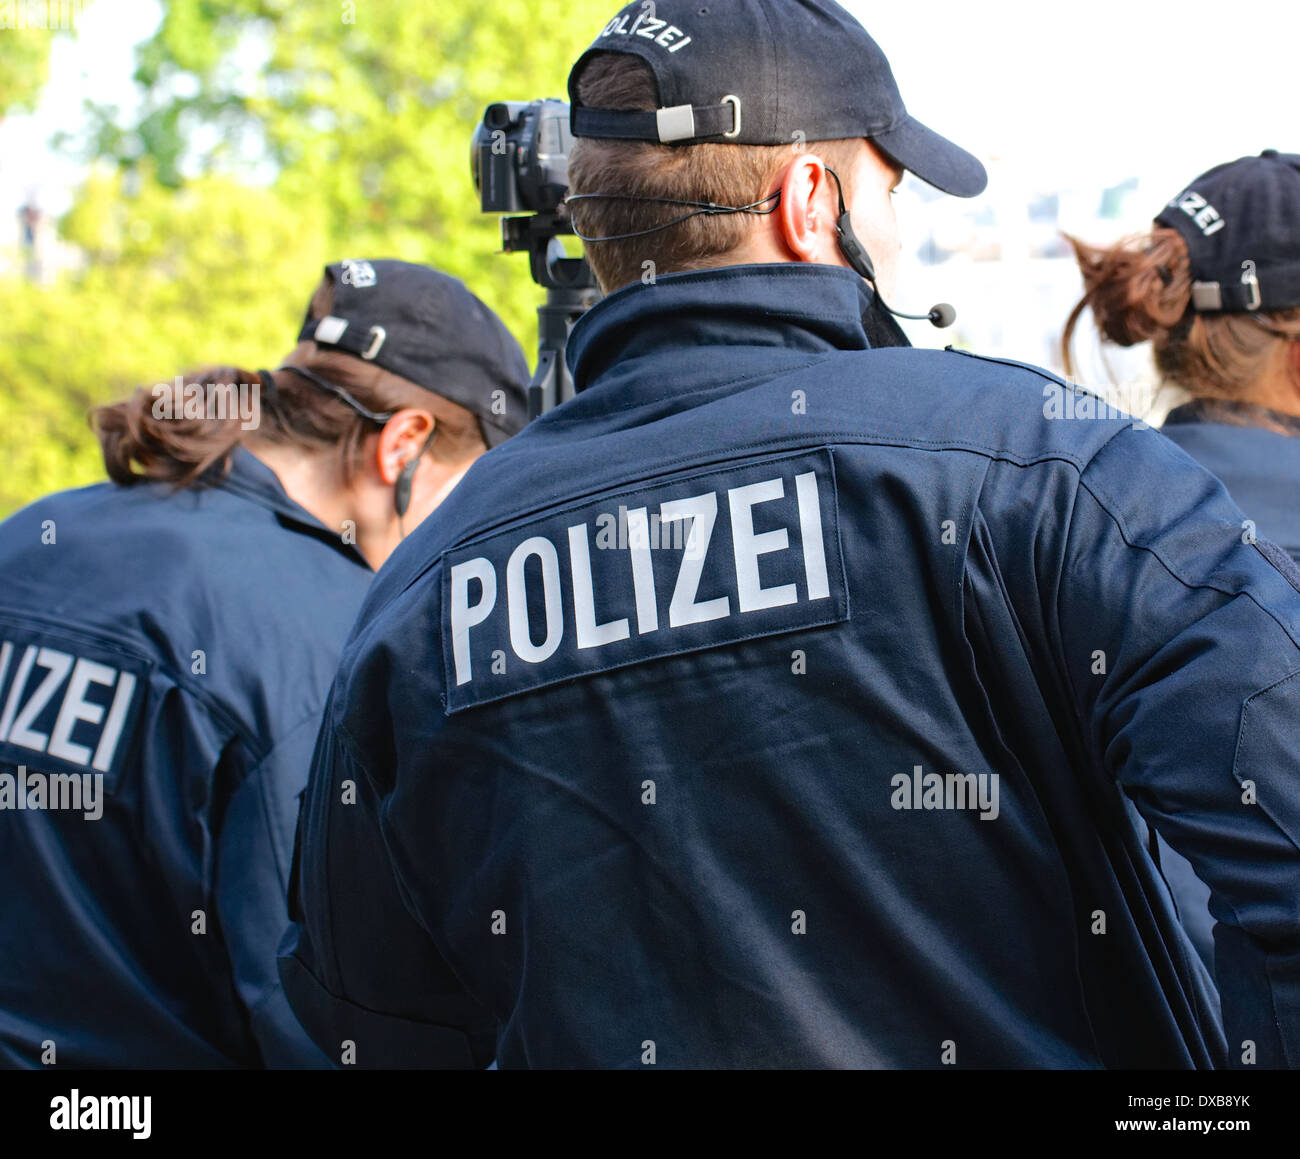 Polizei hamburg hi-res stock photography and images - Alamy